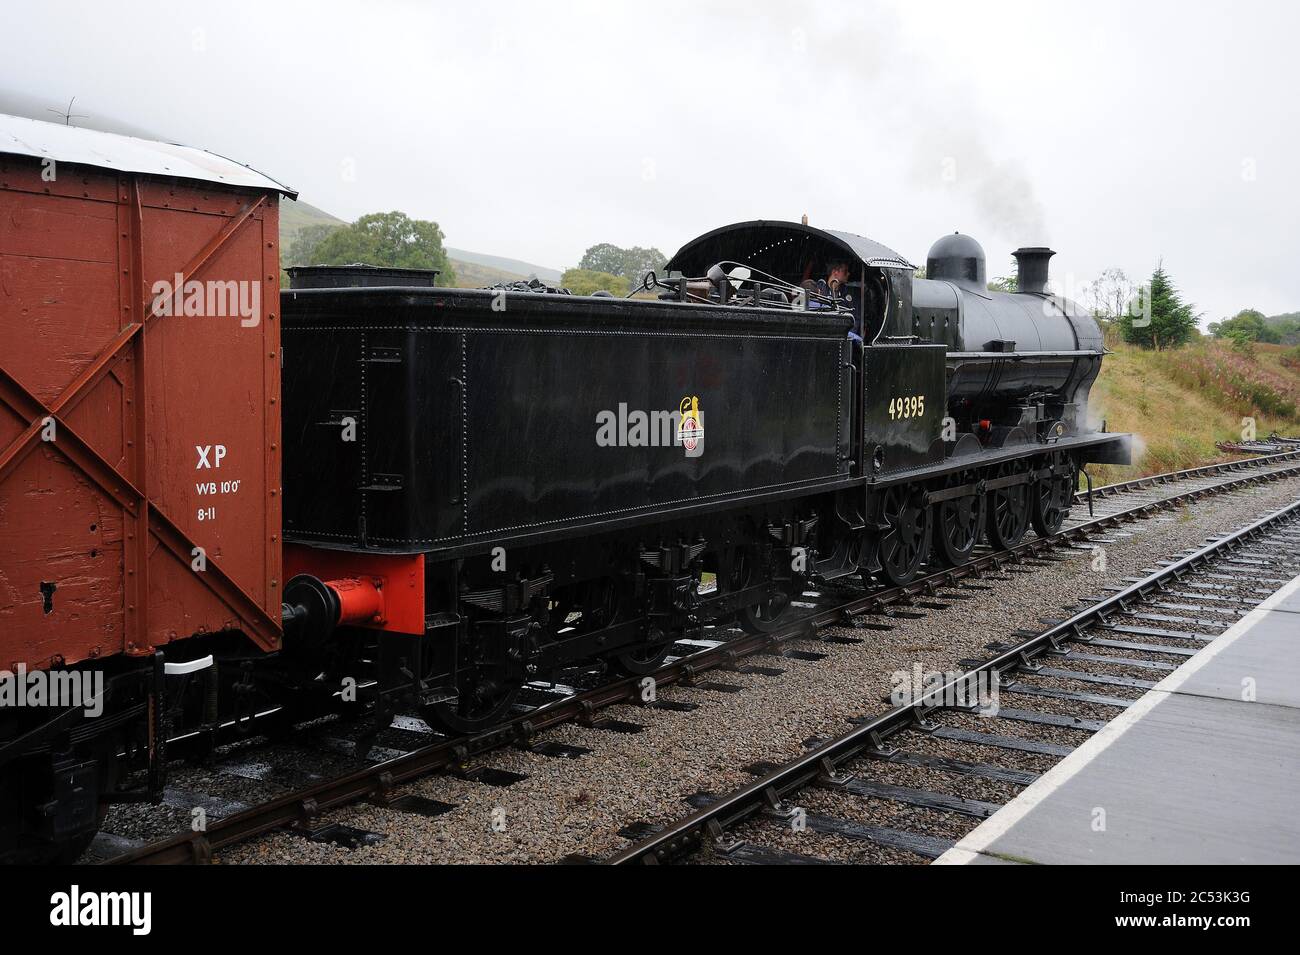 '49395' at Furnace Sidings Station. Stock Photo